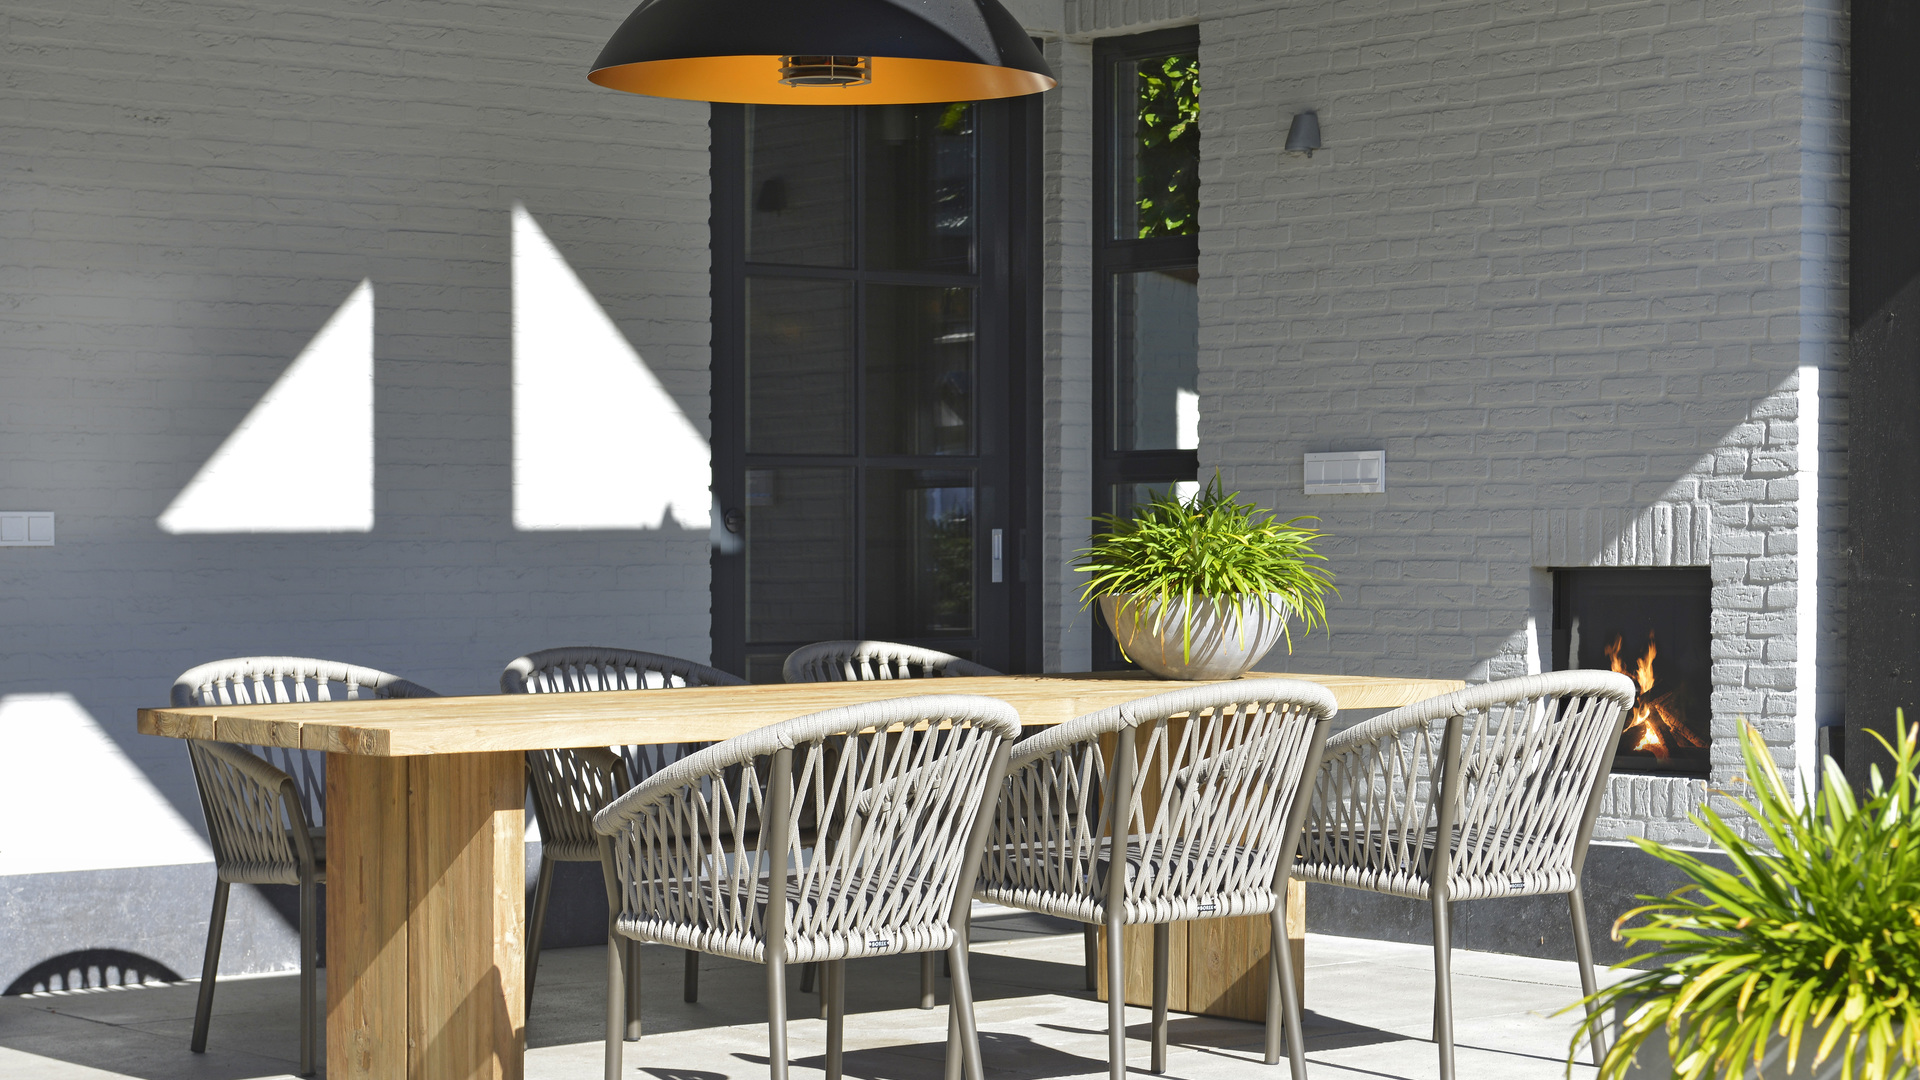 2019 Borek Ardenza belt Majinto chair Studio Borek - reclaimed teak Sevilla table Studio Borek (close-up)  (1).jpg